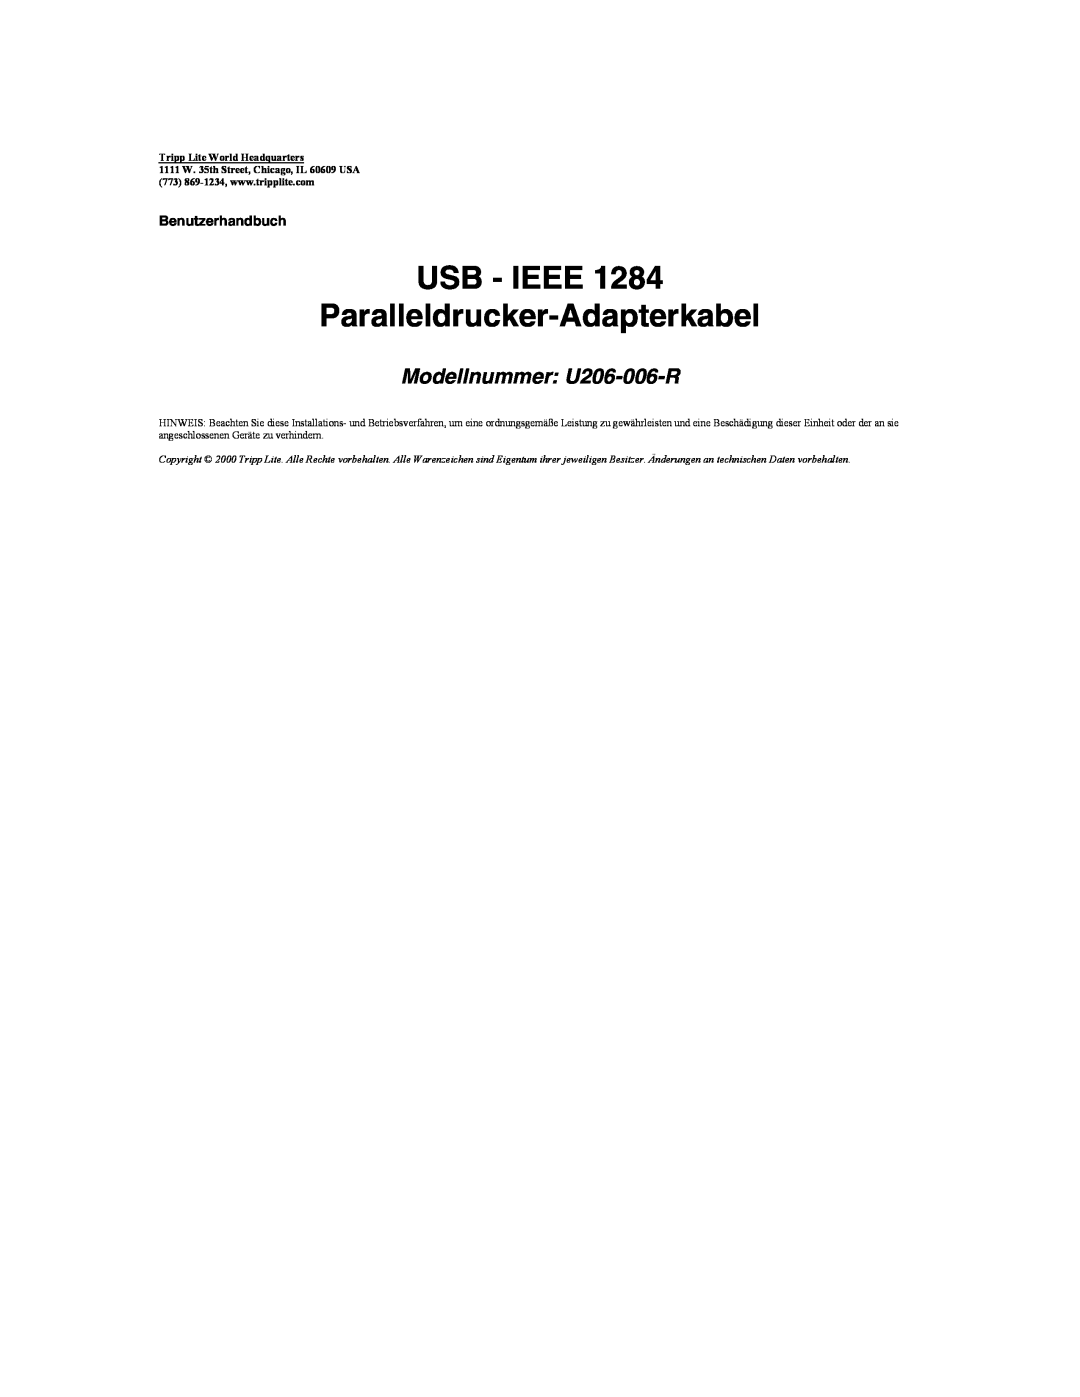 Tripp Lite user manual USB - IEEE Paralleldrucker-Adapterkabel, Modellnummer U206-006-R, Benutzerhandbuch 